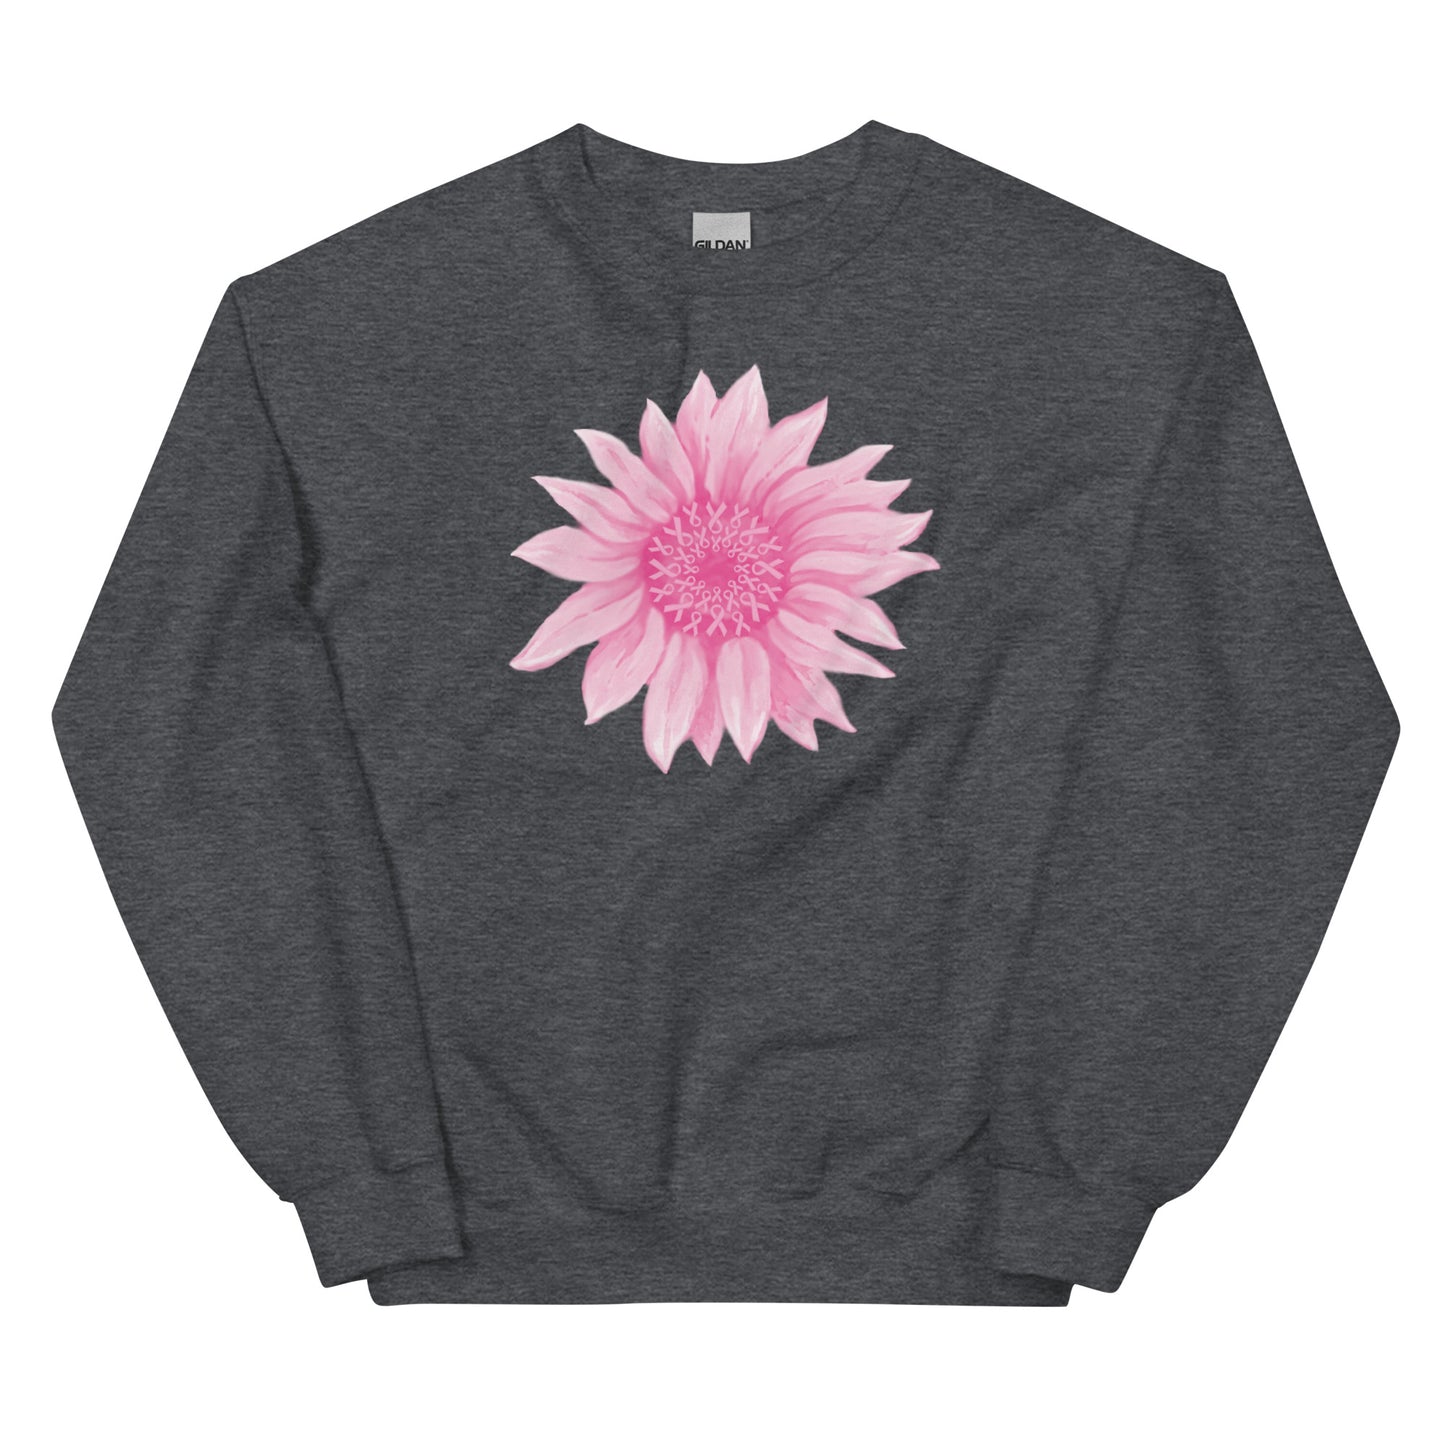 Pink Ribbon Sunflower Crewneck Sweatshirt